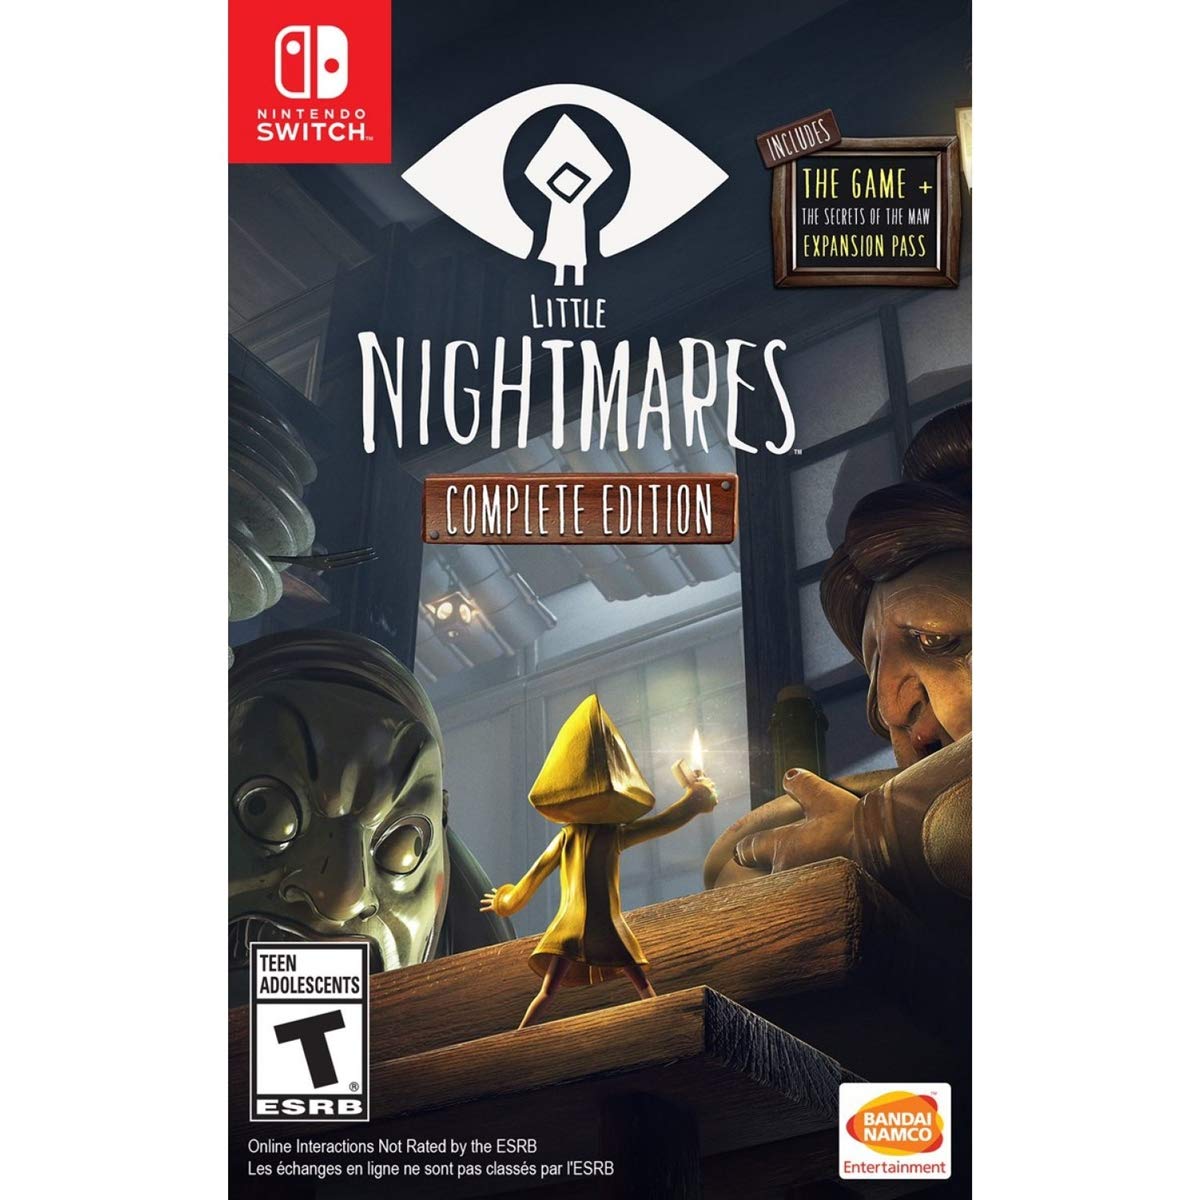 Little Nightmares: Complete Edition [European Import] (Nintendo Switch)